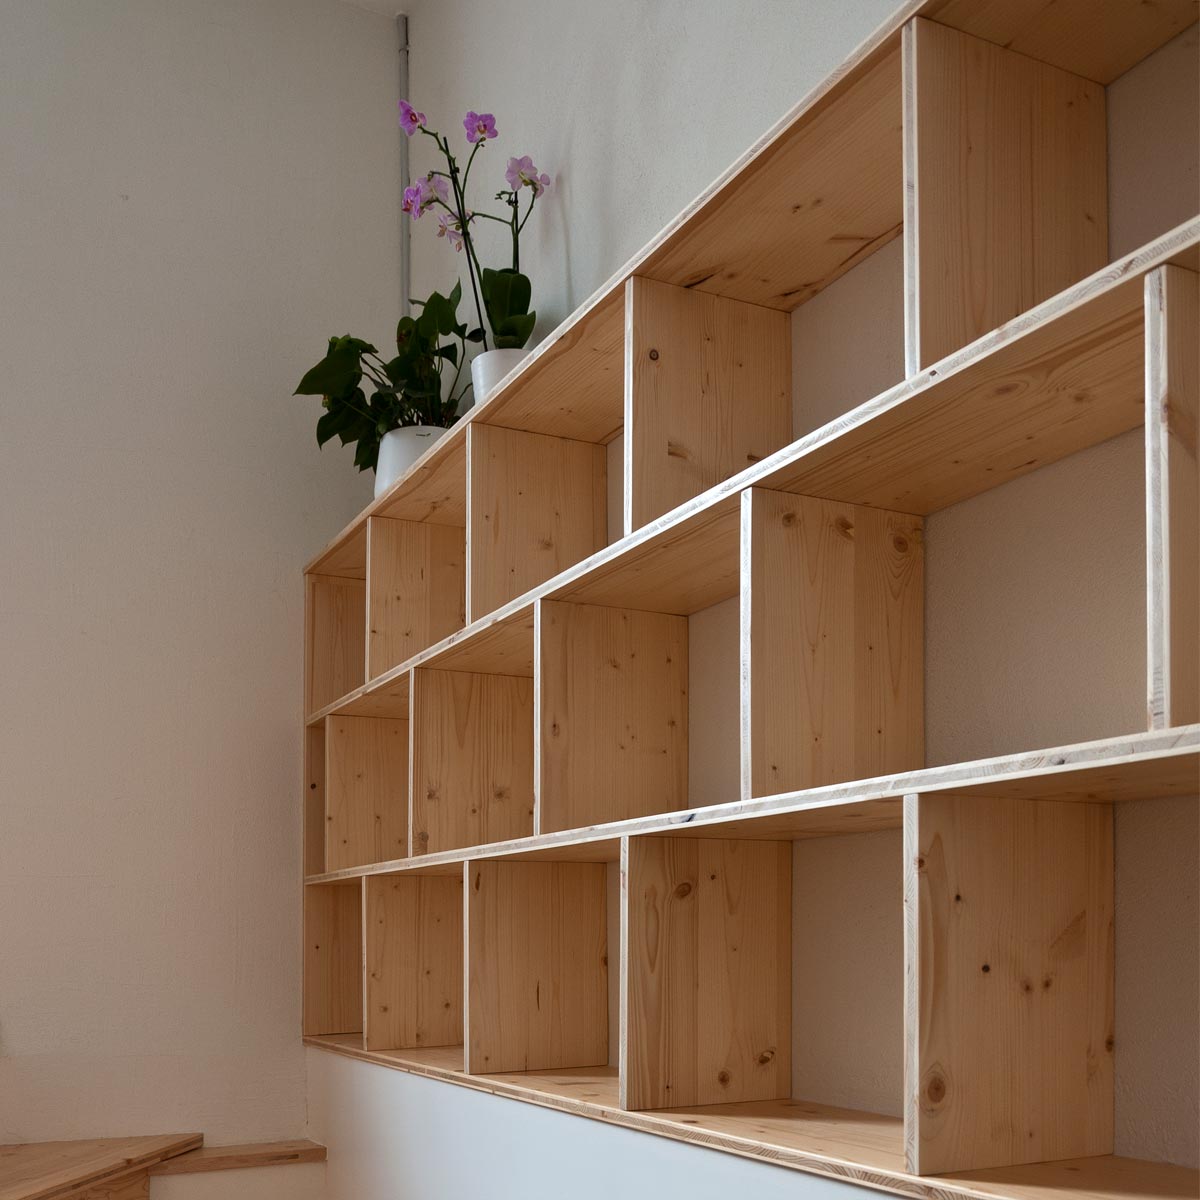 DIY bookshelf made by: TTKK